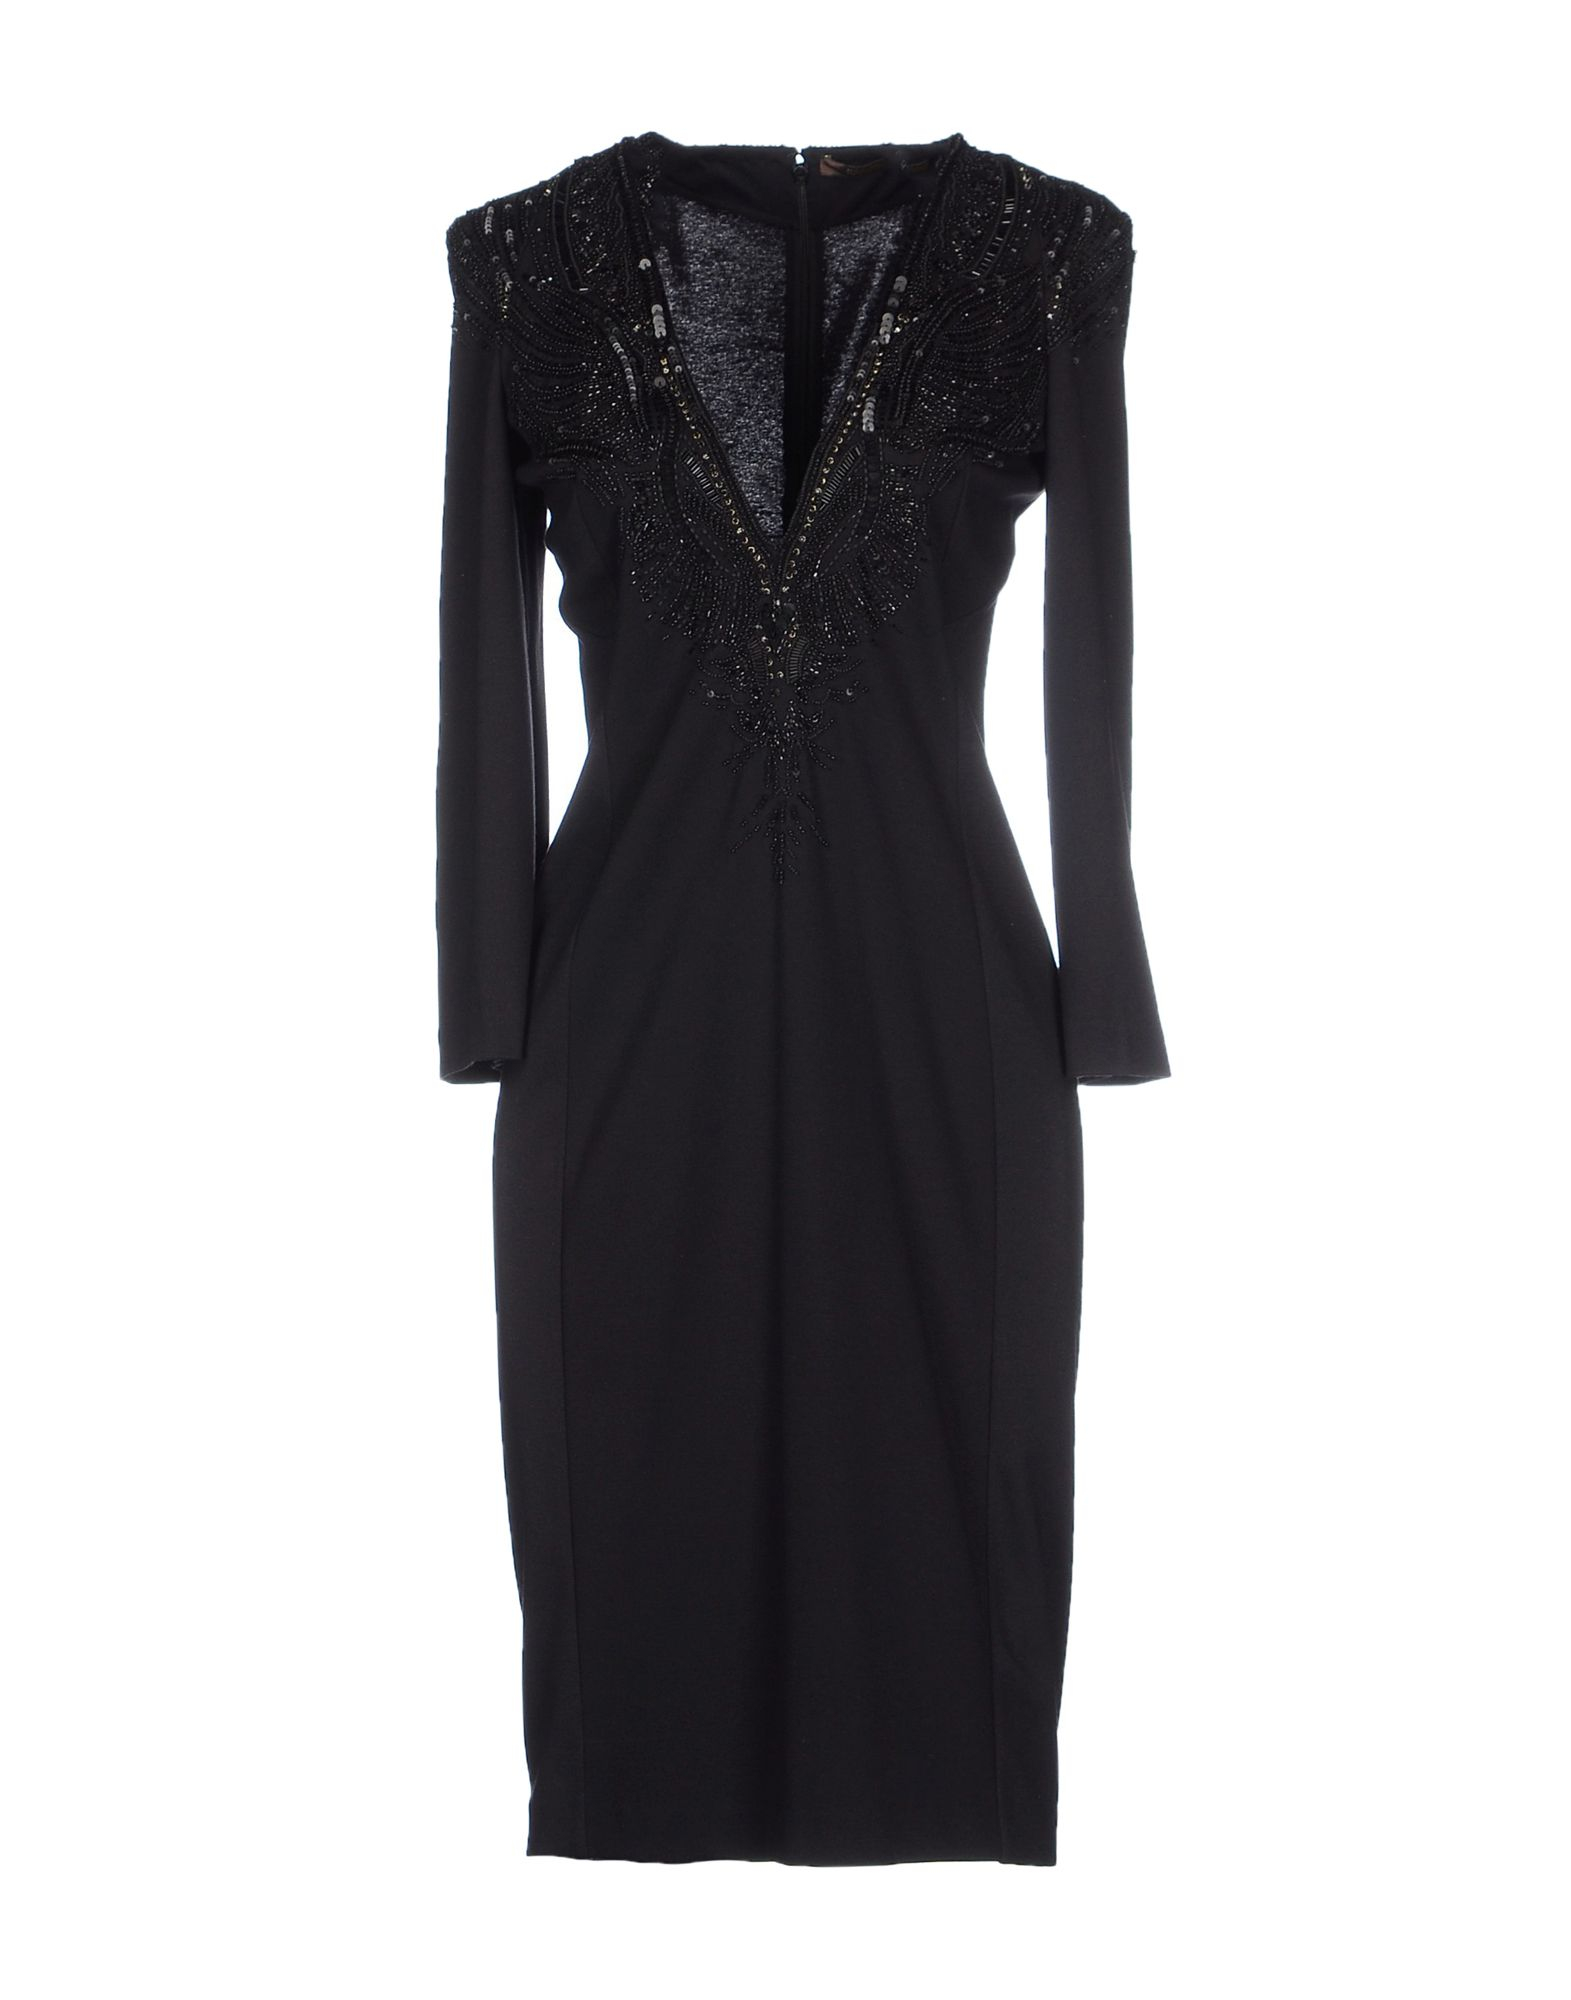 Lyst - Roberto Cavalli Short Dress in Black